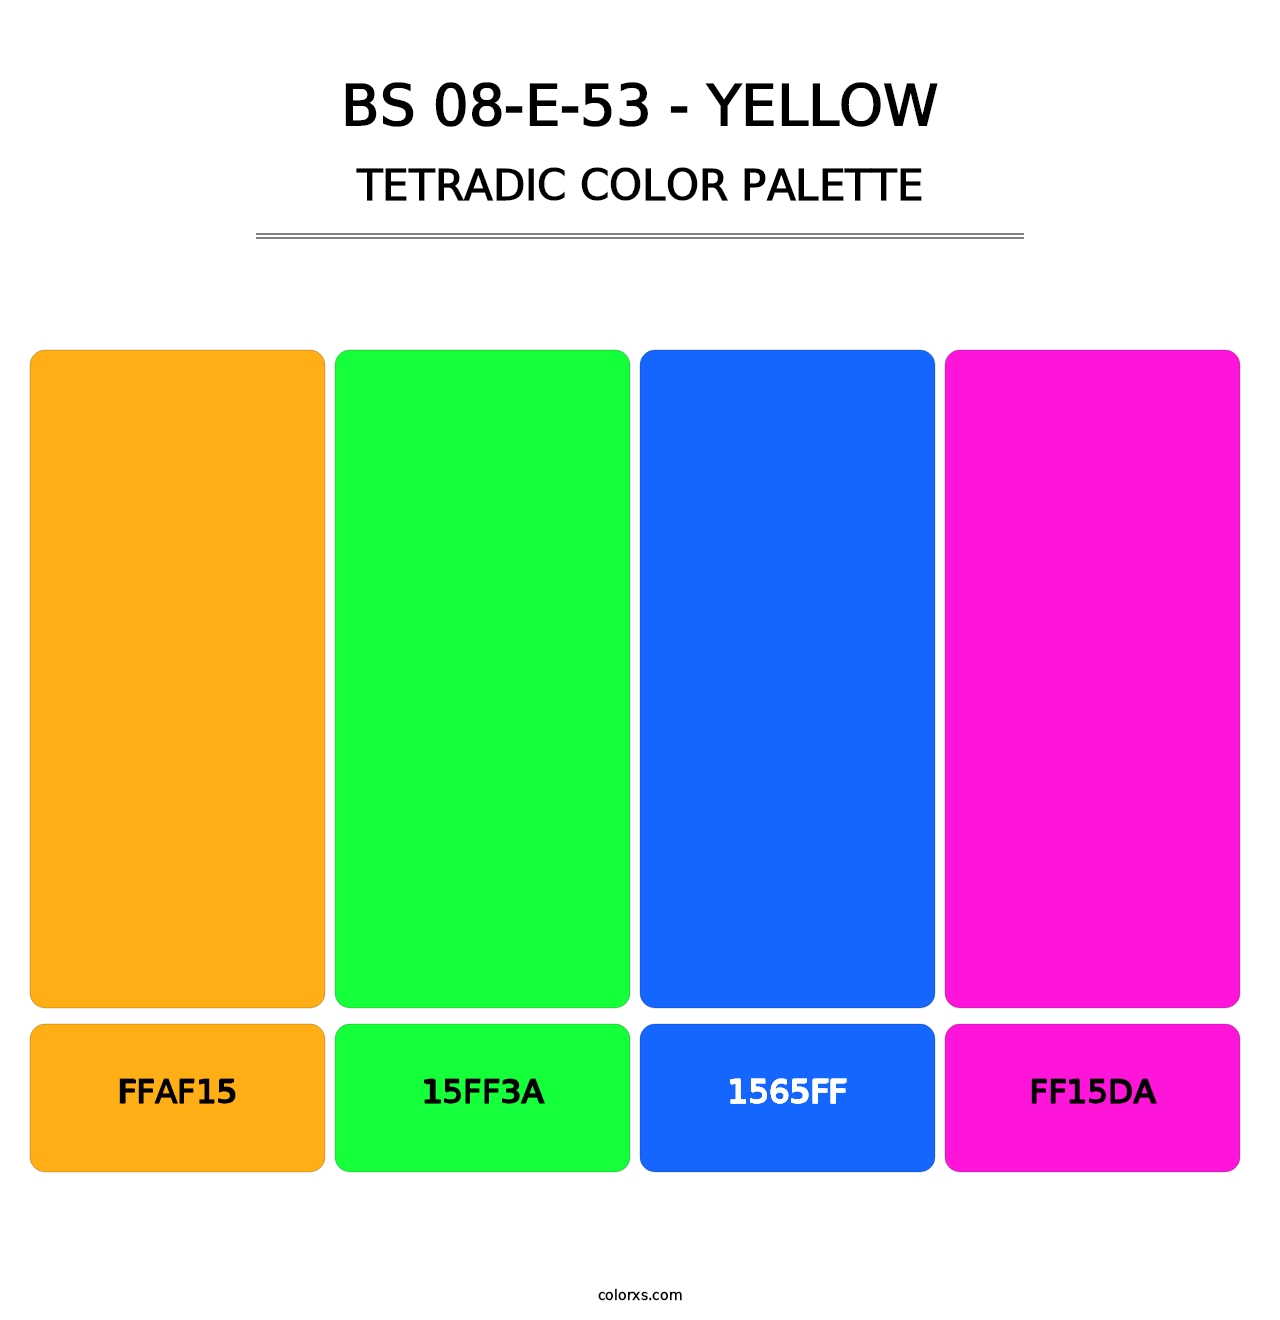 BS 08-E-53 - Yellow - Tetradic Color Palette